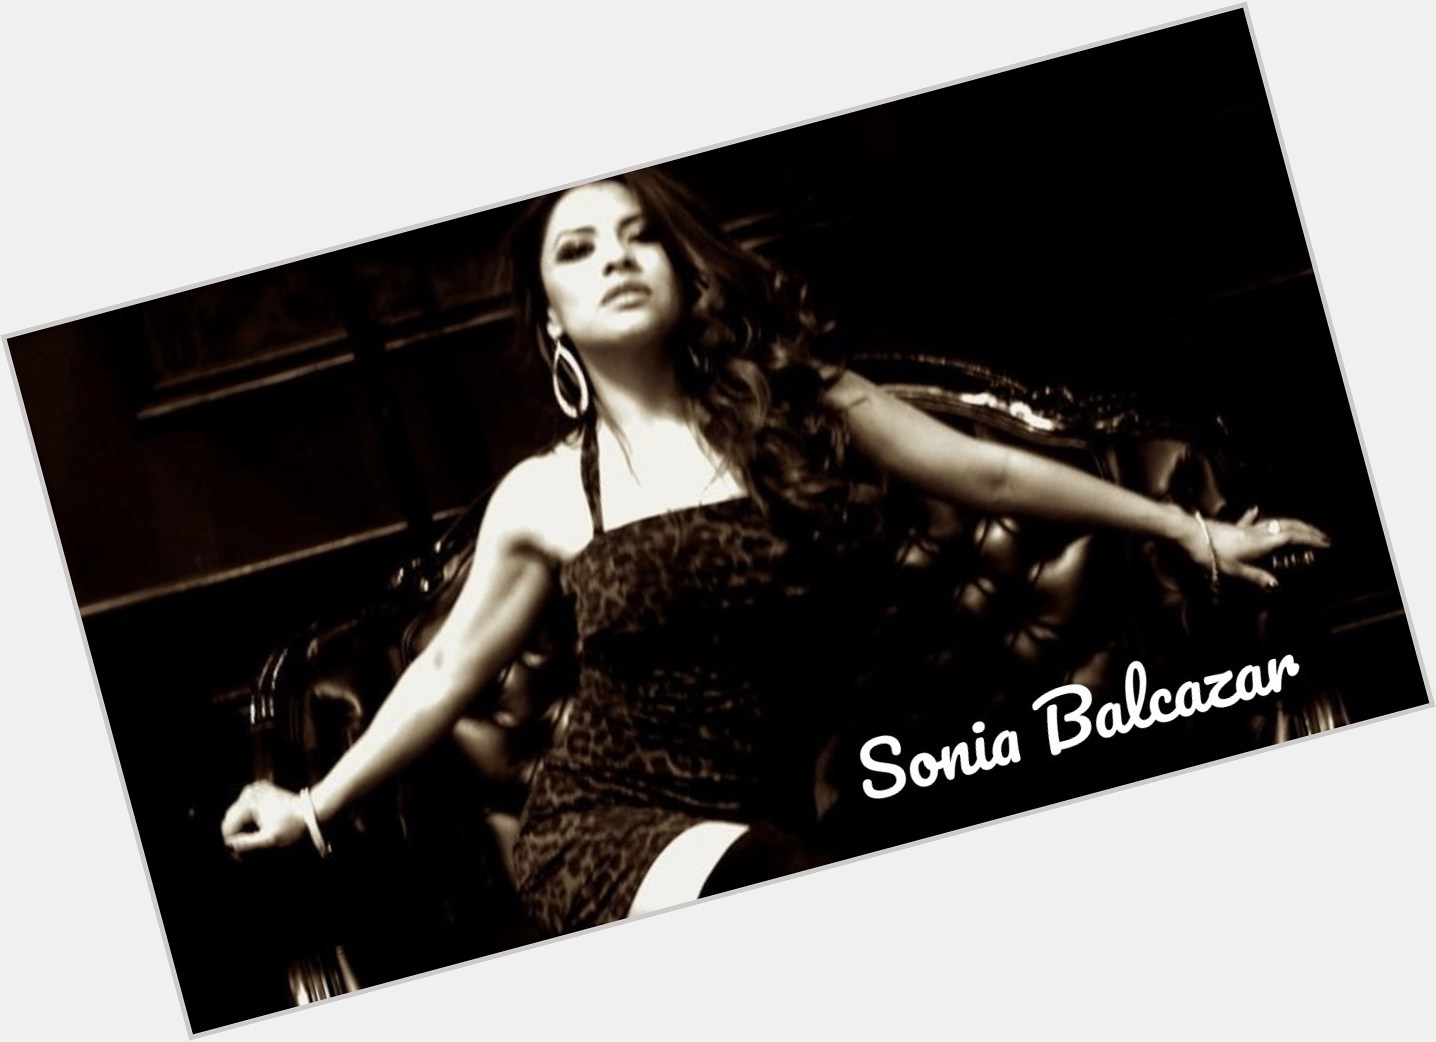 Sonia Balcazar Slim body,  dark brown hair & hairstyles